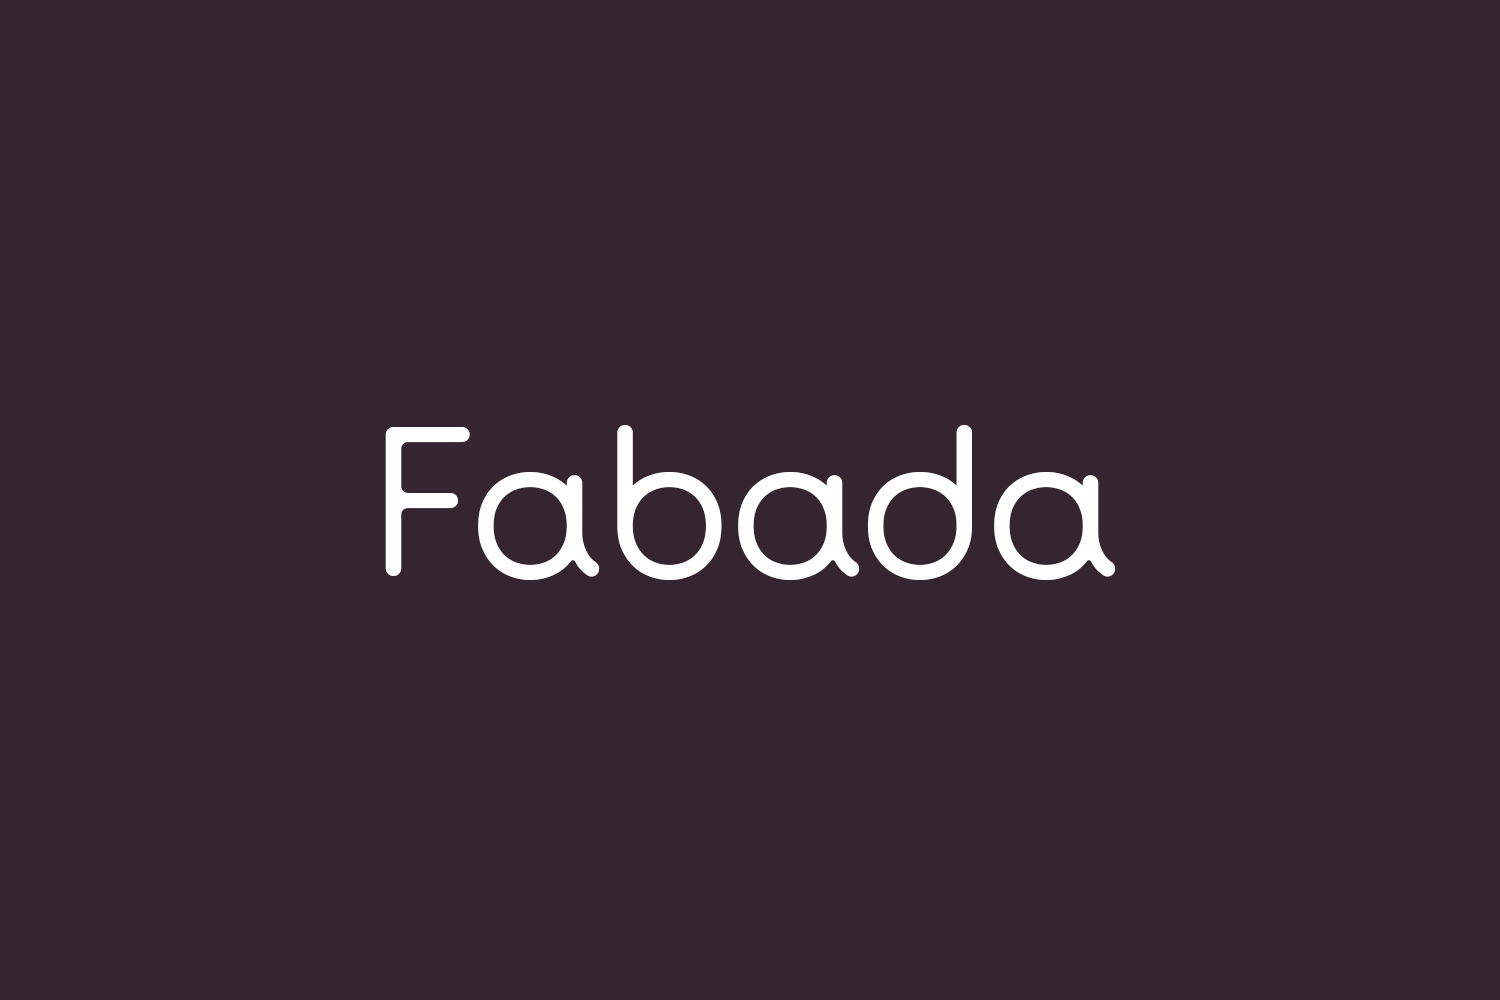 Fabada Free Font